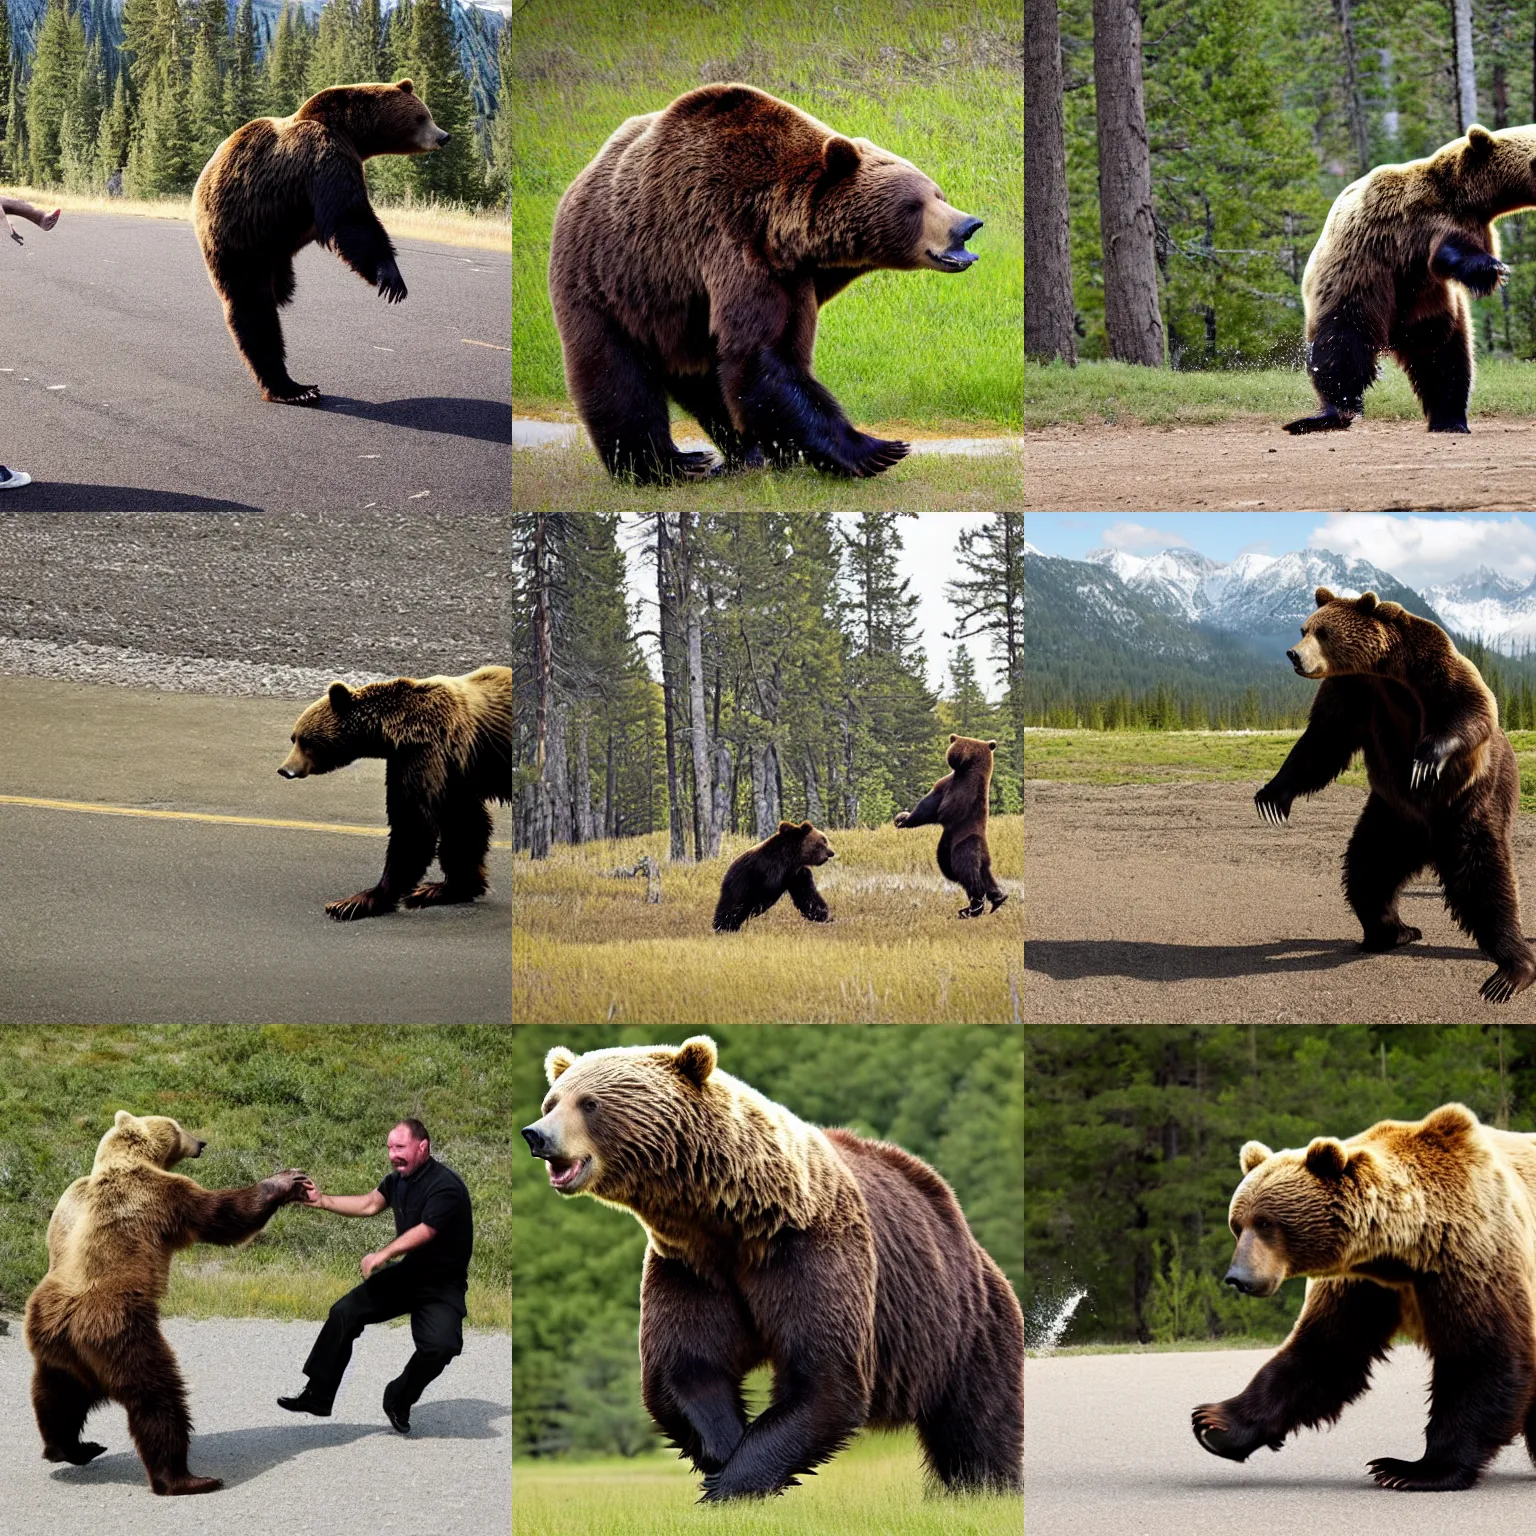 Prompt: photo, A man kicks a bear.